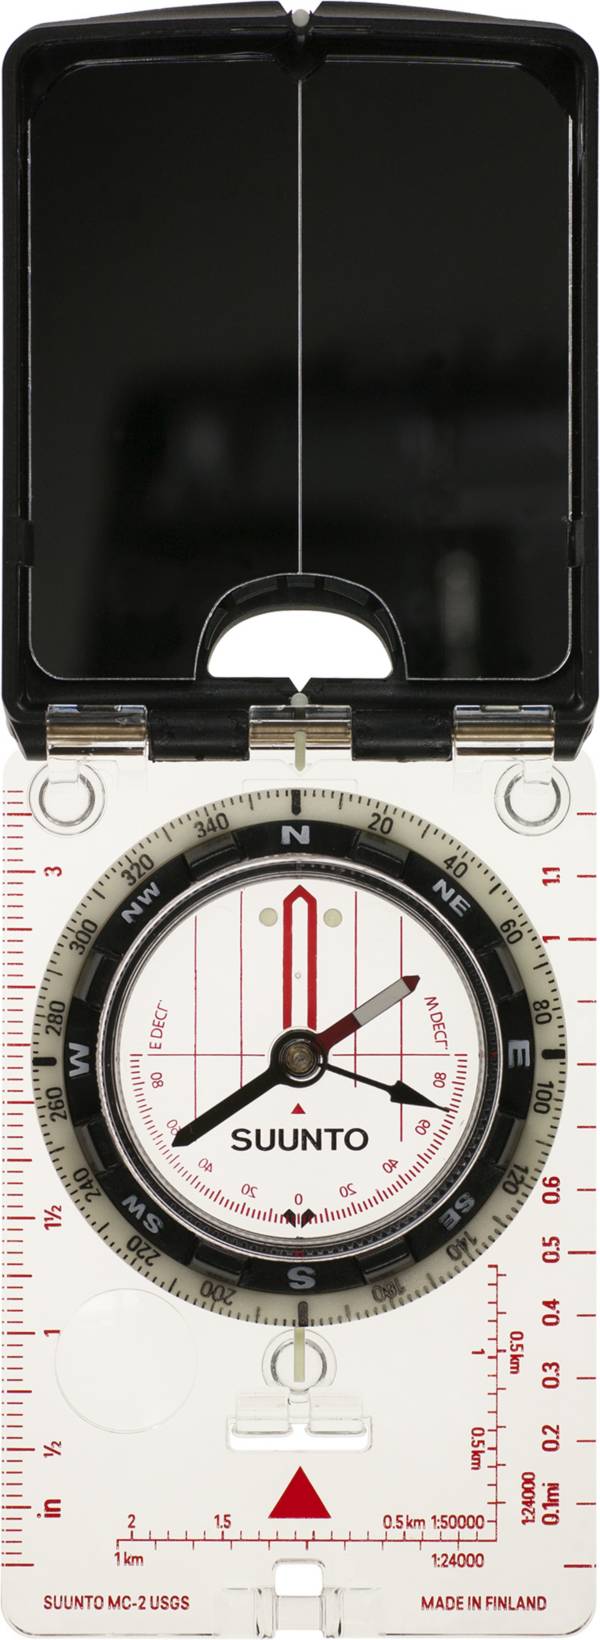 Suunto MC-2 USGS Mirror Compass product image